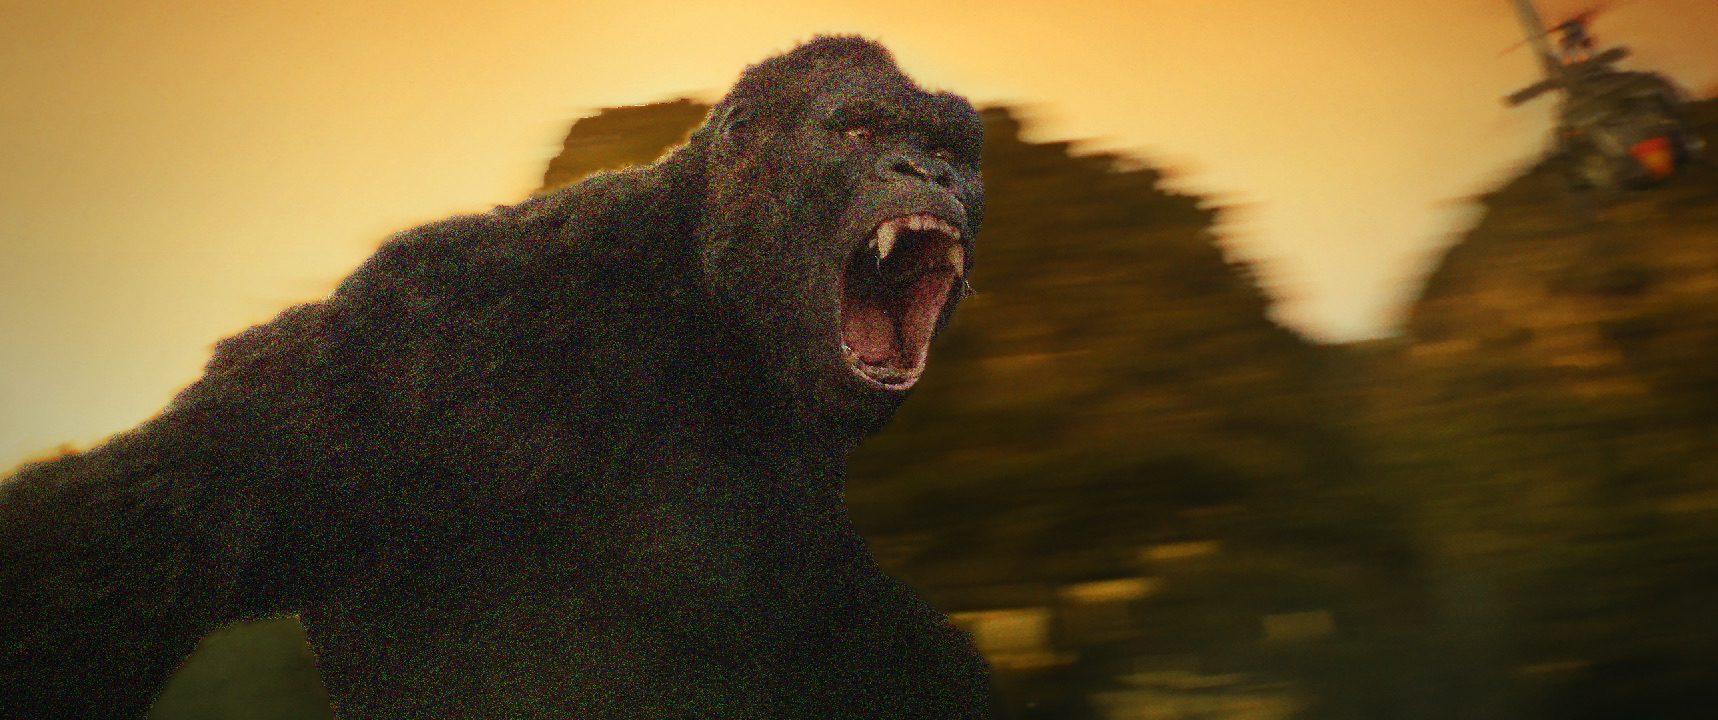 Kong: Skull Island (Warner Bros Pictures)